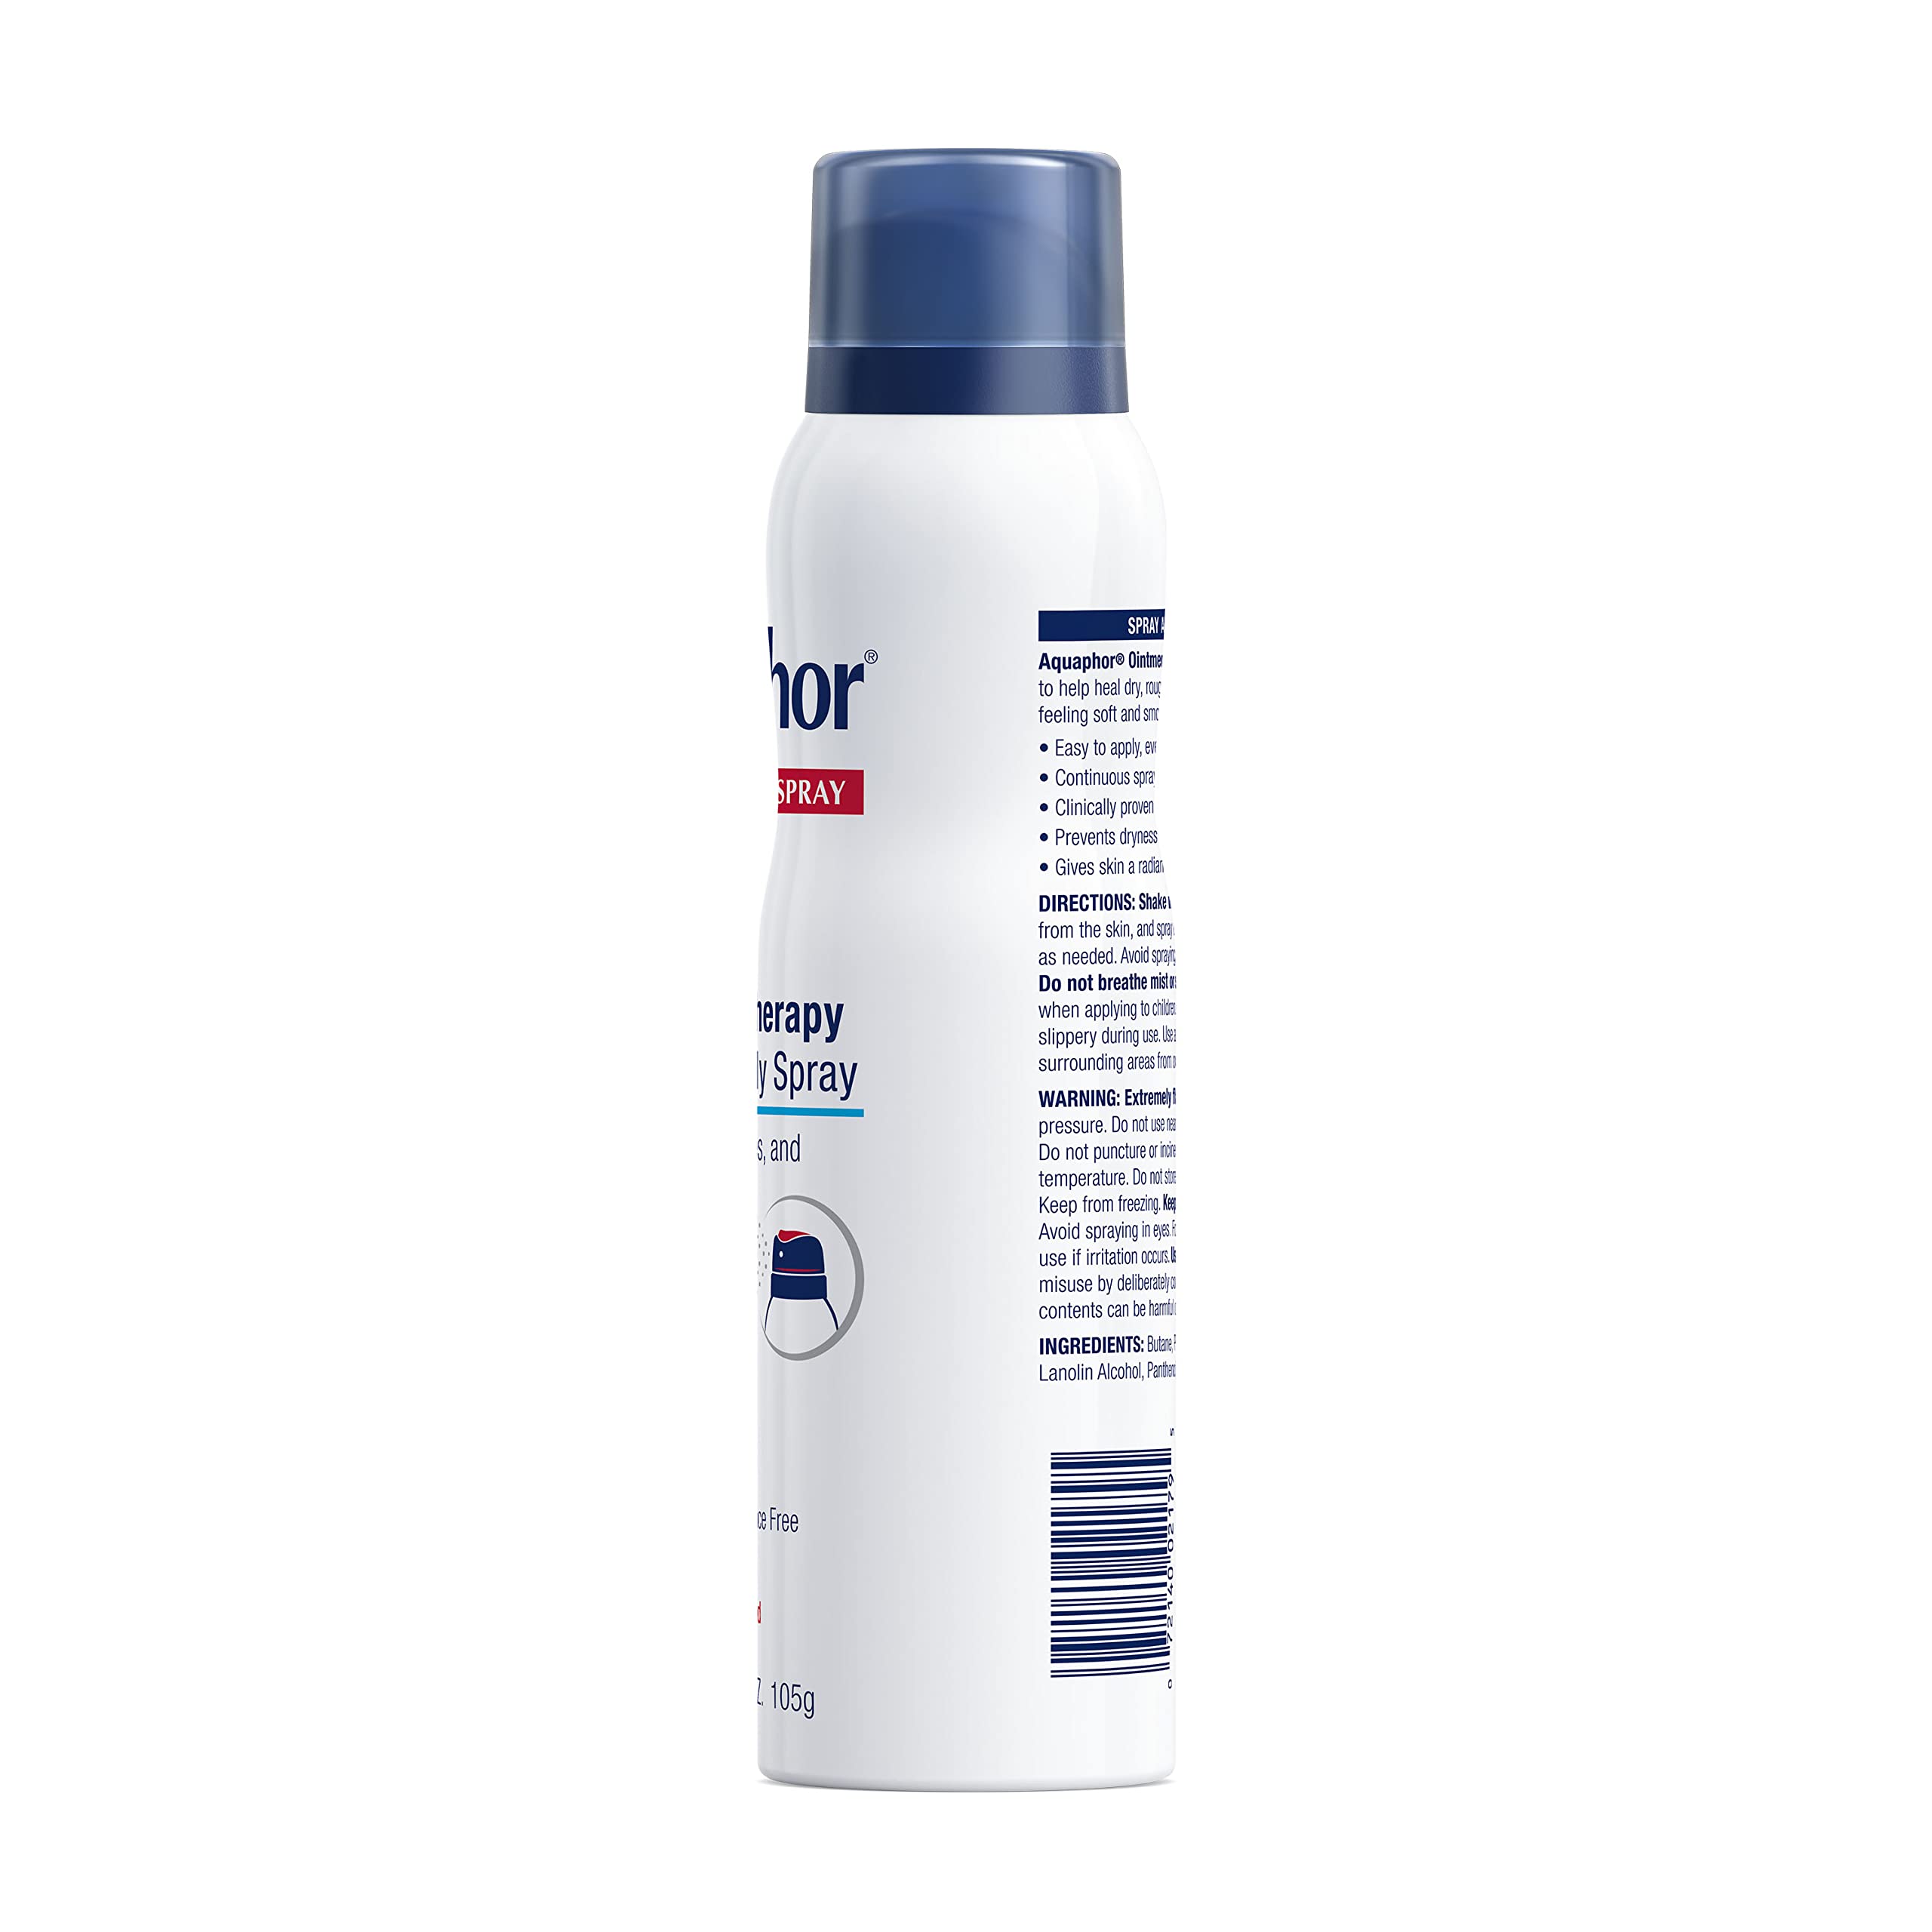 Aquaphor Ointment Body Spray - Moisturizes and Heals Dry, Rough Skin - 3.7 oz. Spray Can